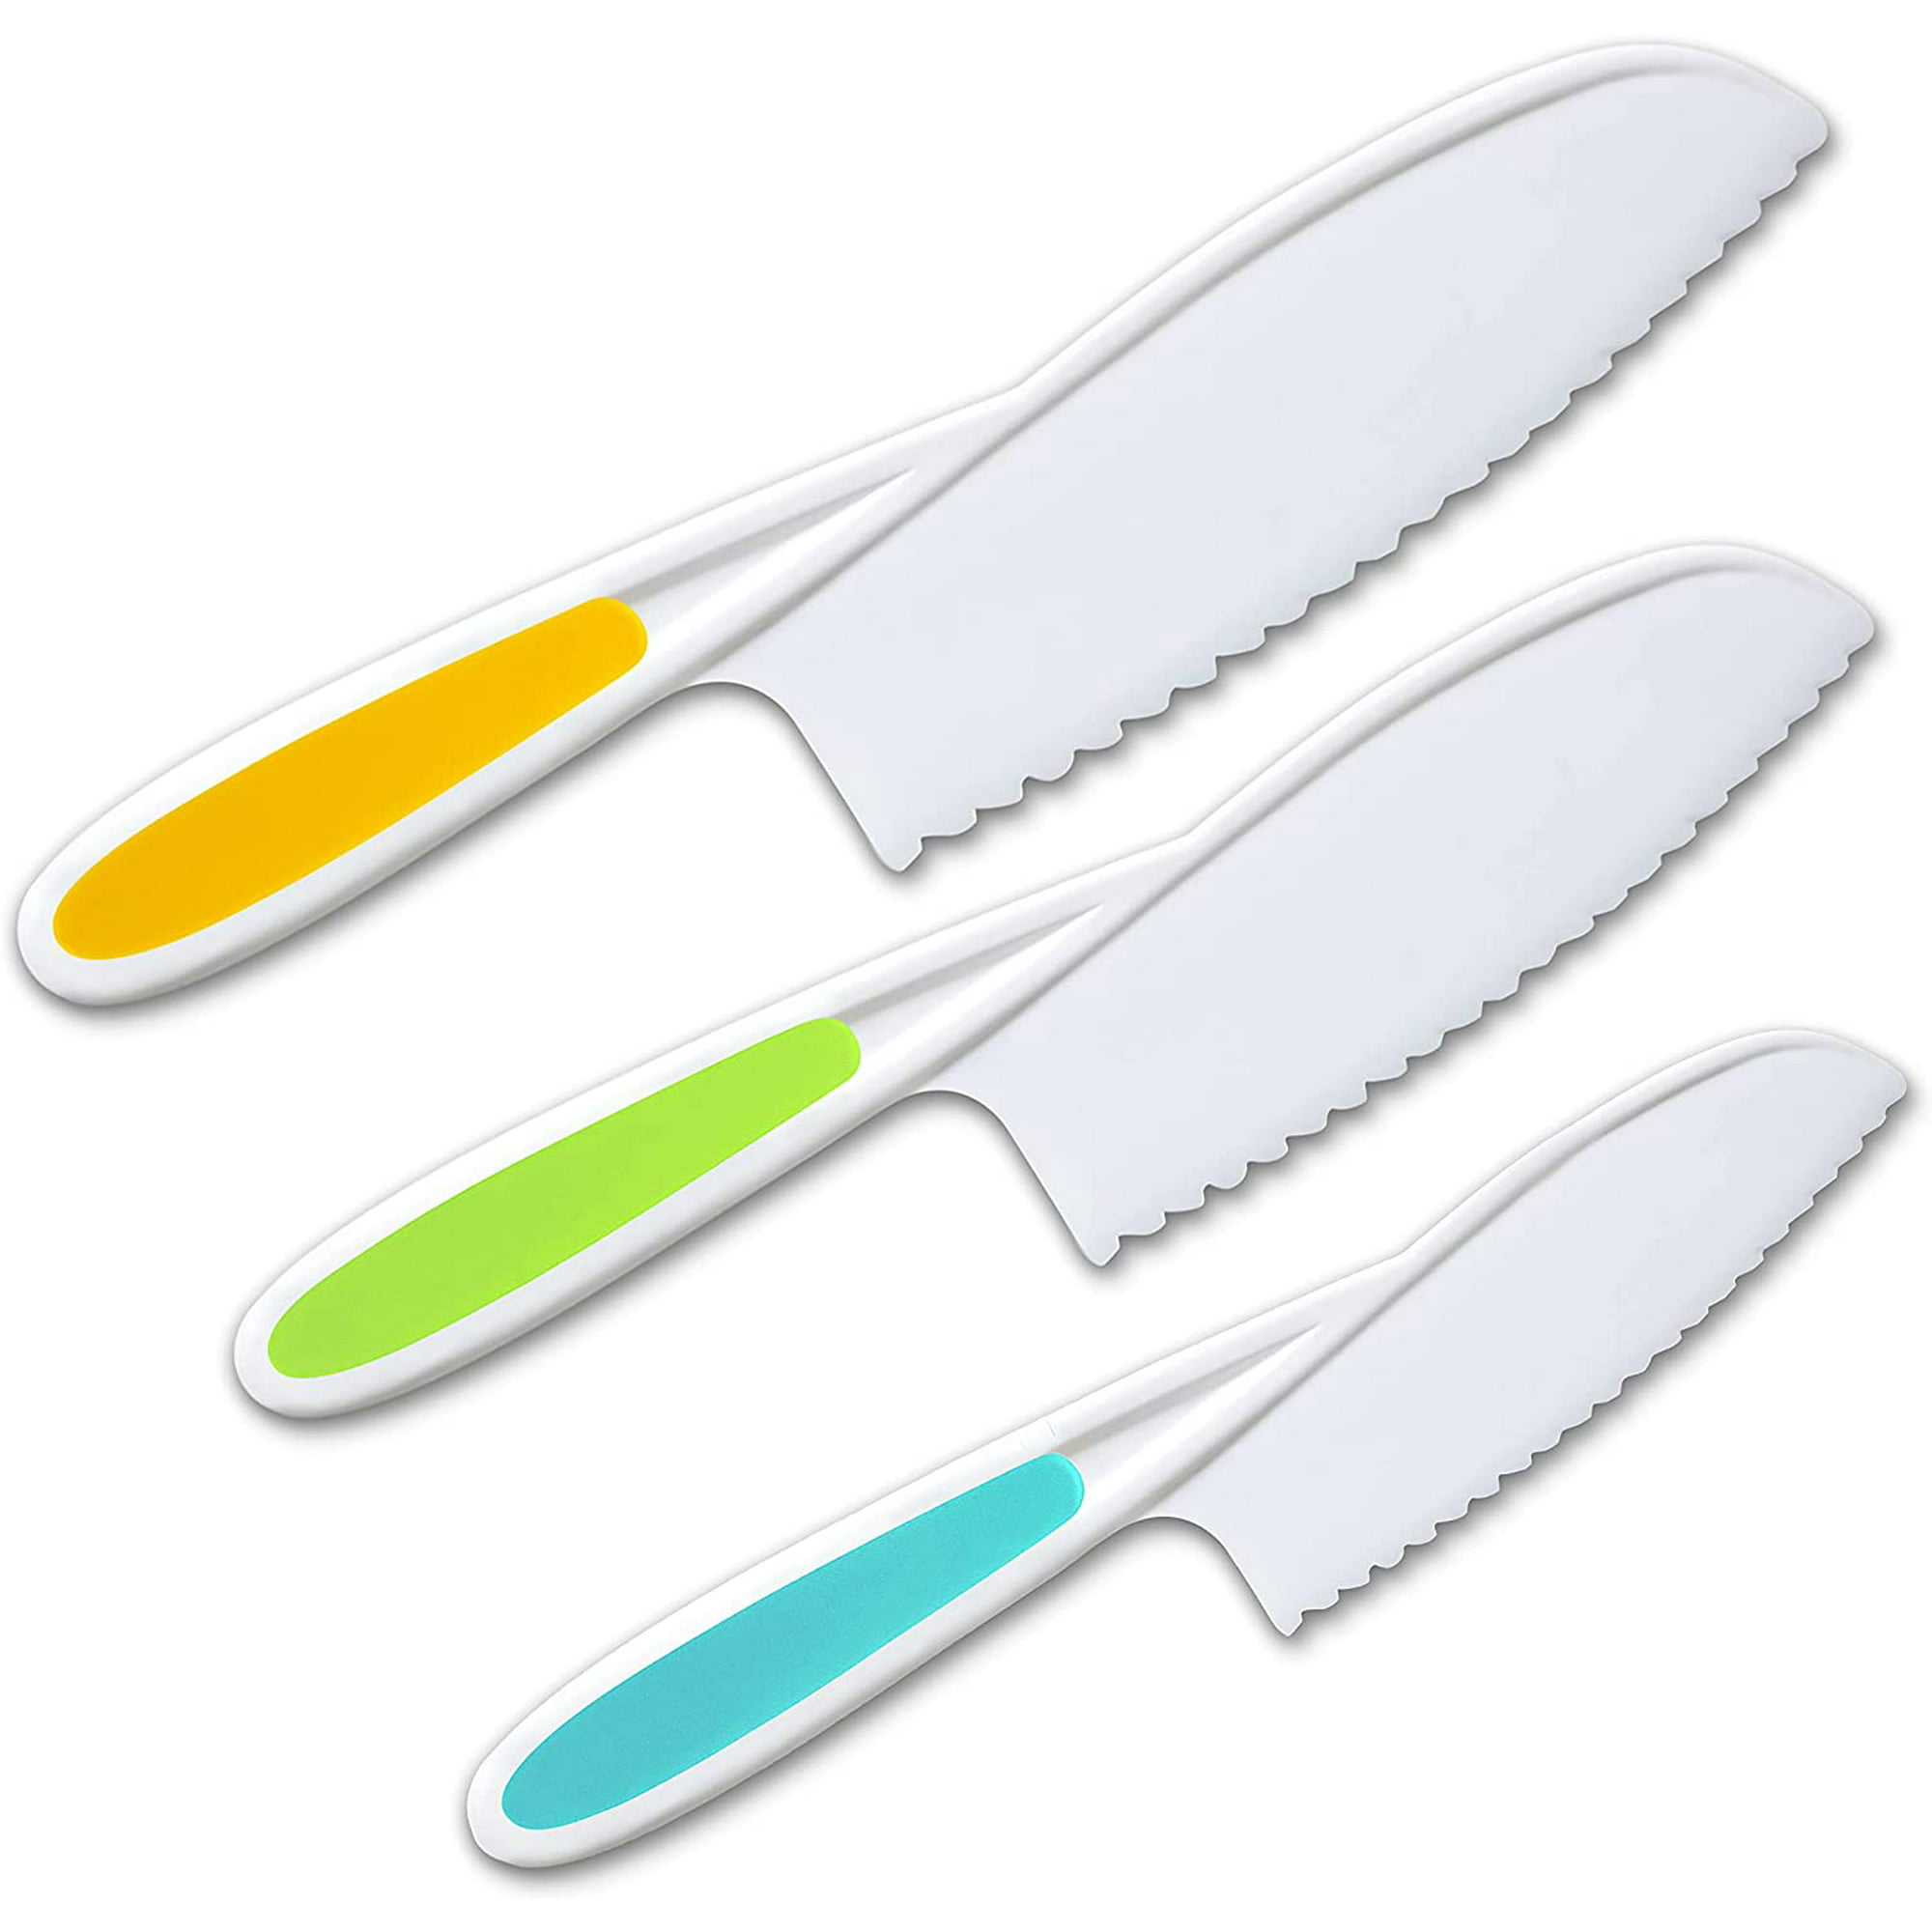 Cuchillo de cocina de plástico, 3 tamaños diferentes de cuchillo de cocina  de plástico, juego de cuchillos para niños para cortar frutas, verduras